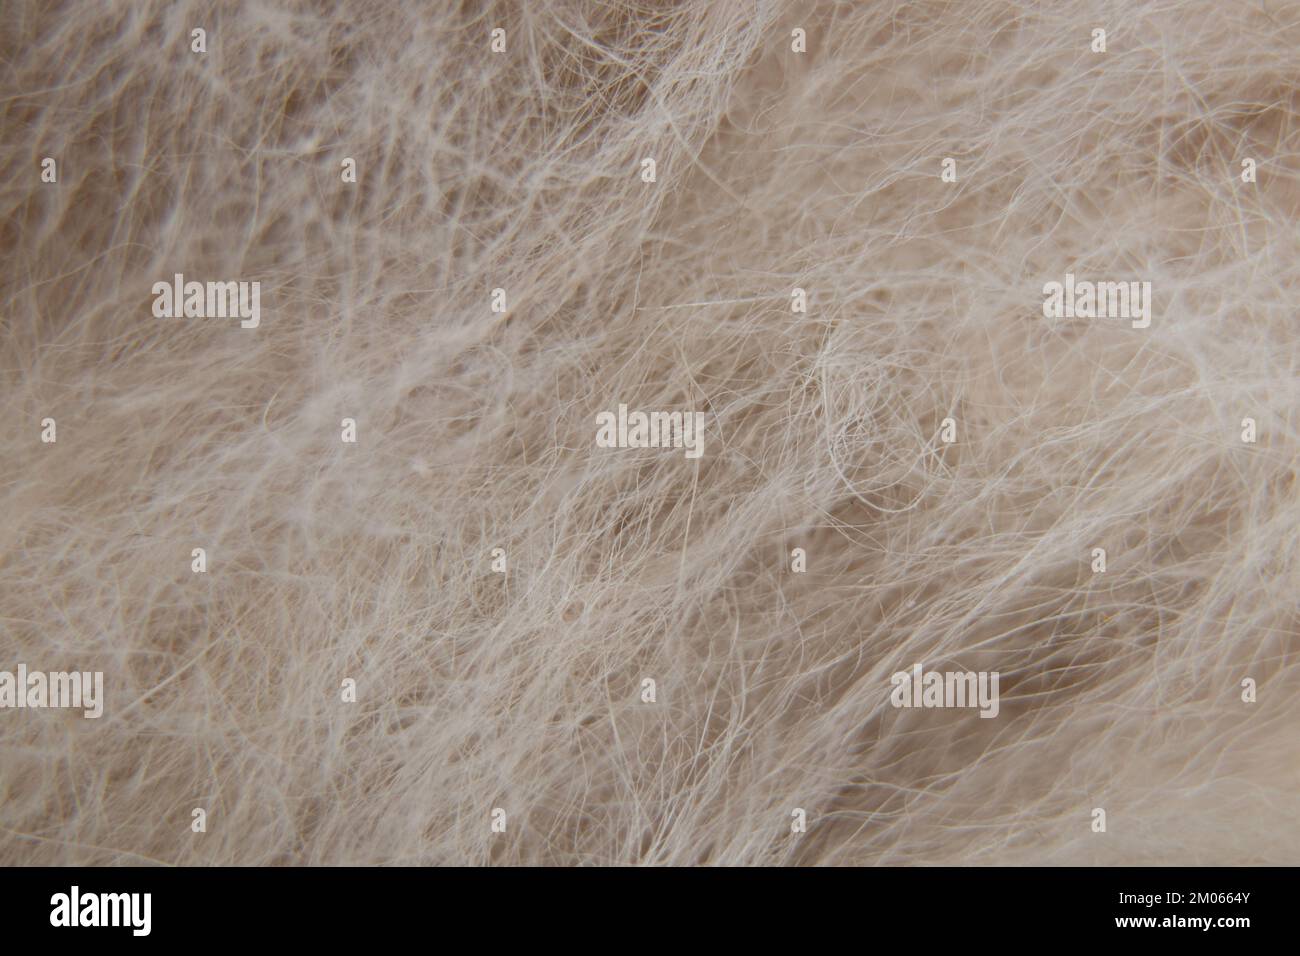 lana naturale bianca morbida come foto macro di sfondo Foto Stock